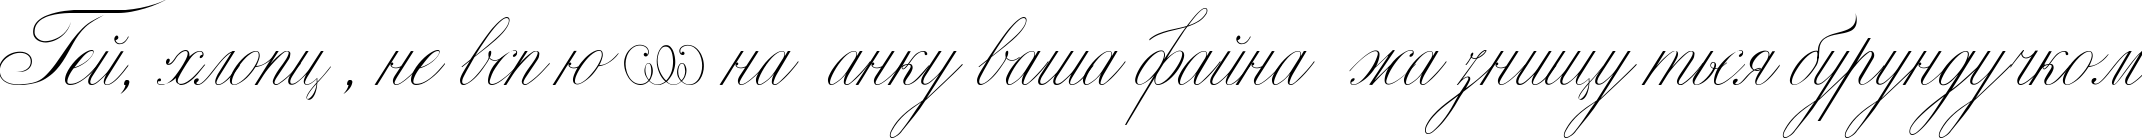 Пример написания шрифтом Classica One текста на украинском